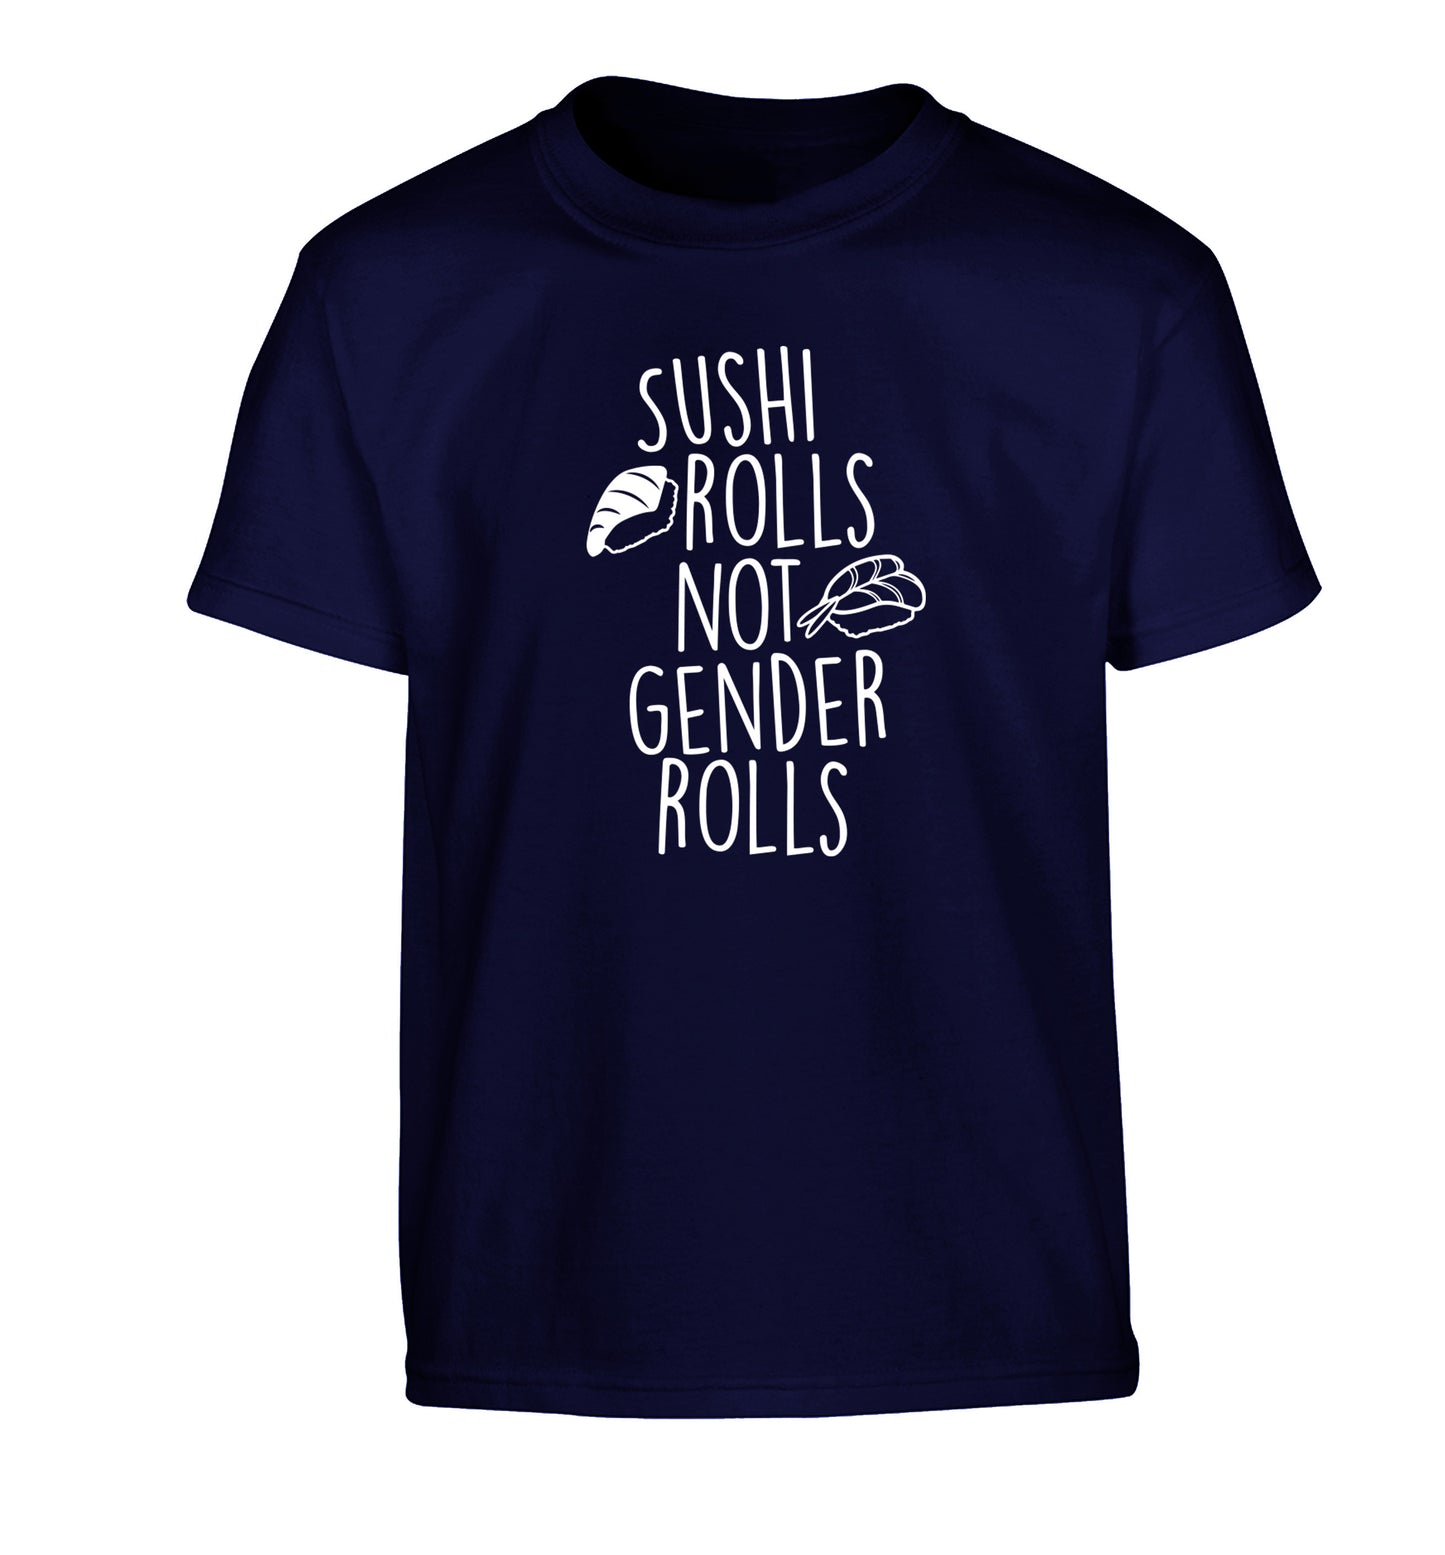 Sushi rolls not gender rolls Children's navy Tshirt 12-14 Years